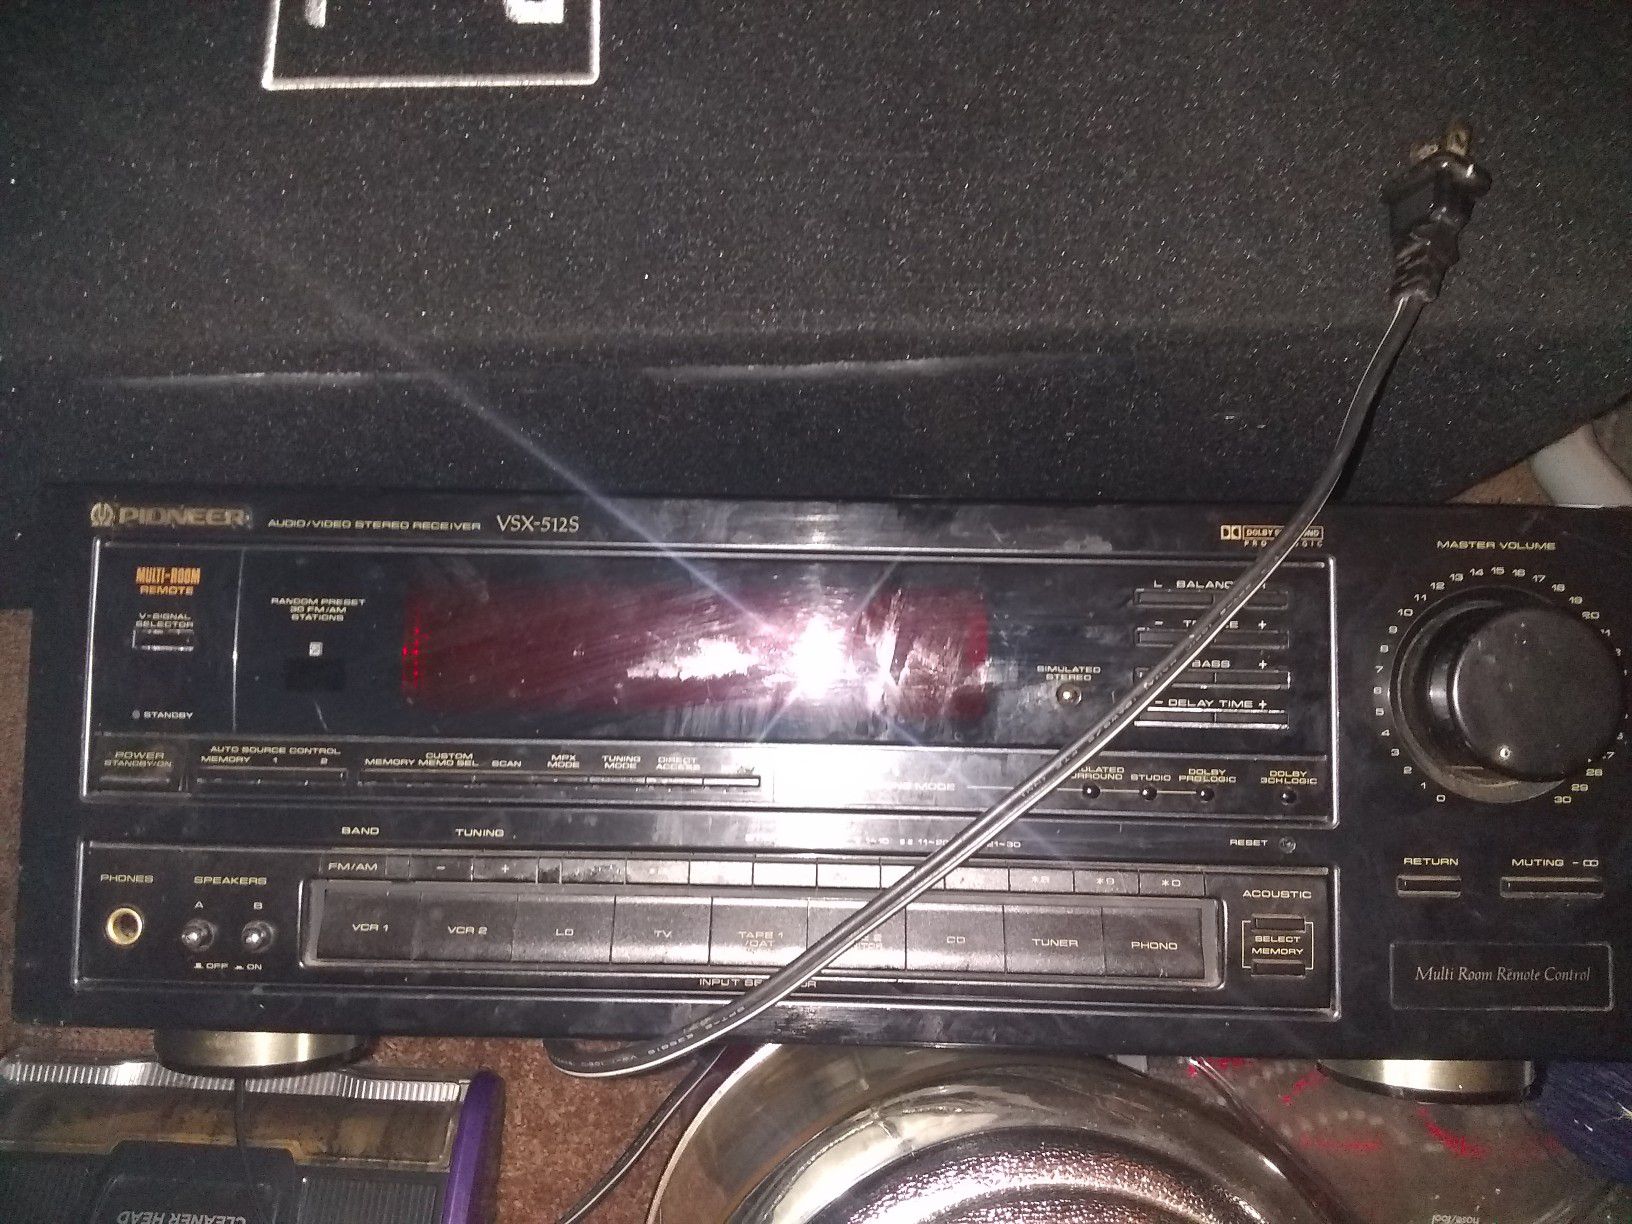 Old school pioneer receiver amp